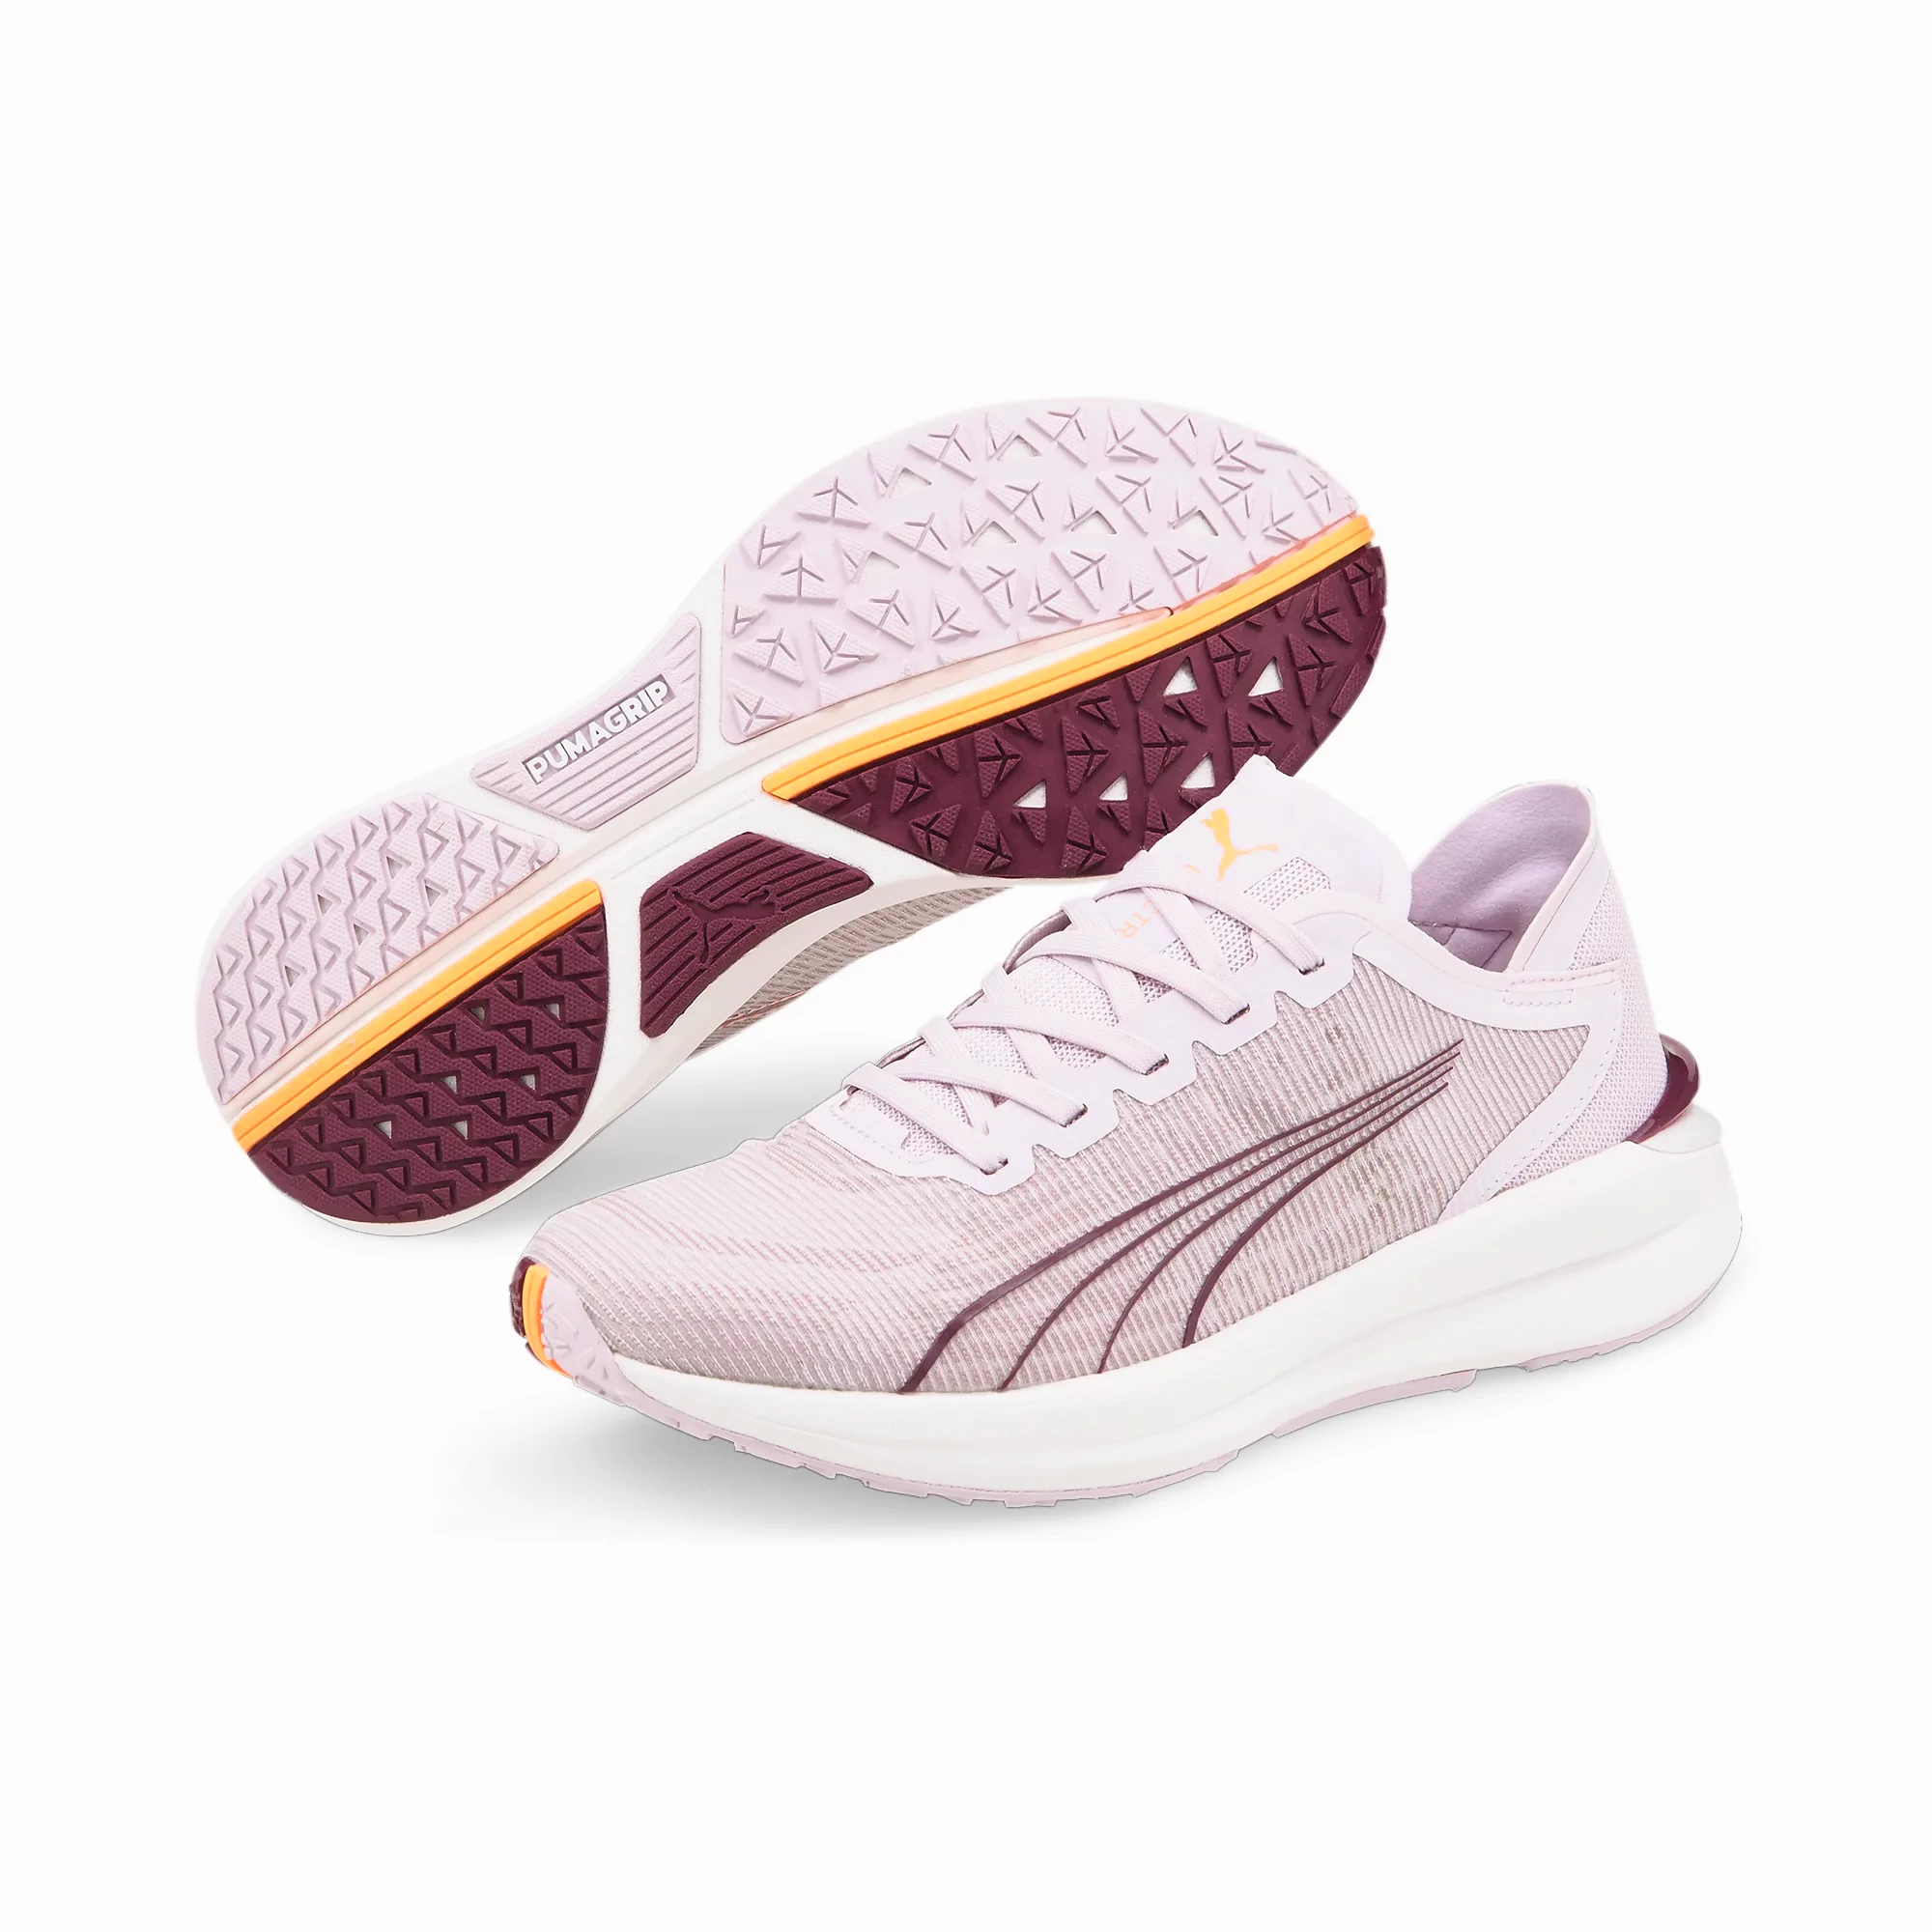 Puma Electrify Nitro Lavender Fog Women's Running Shoes